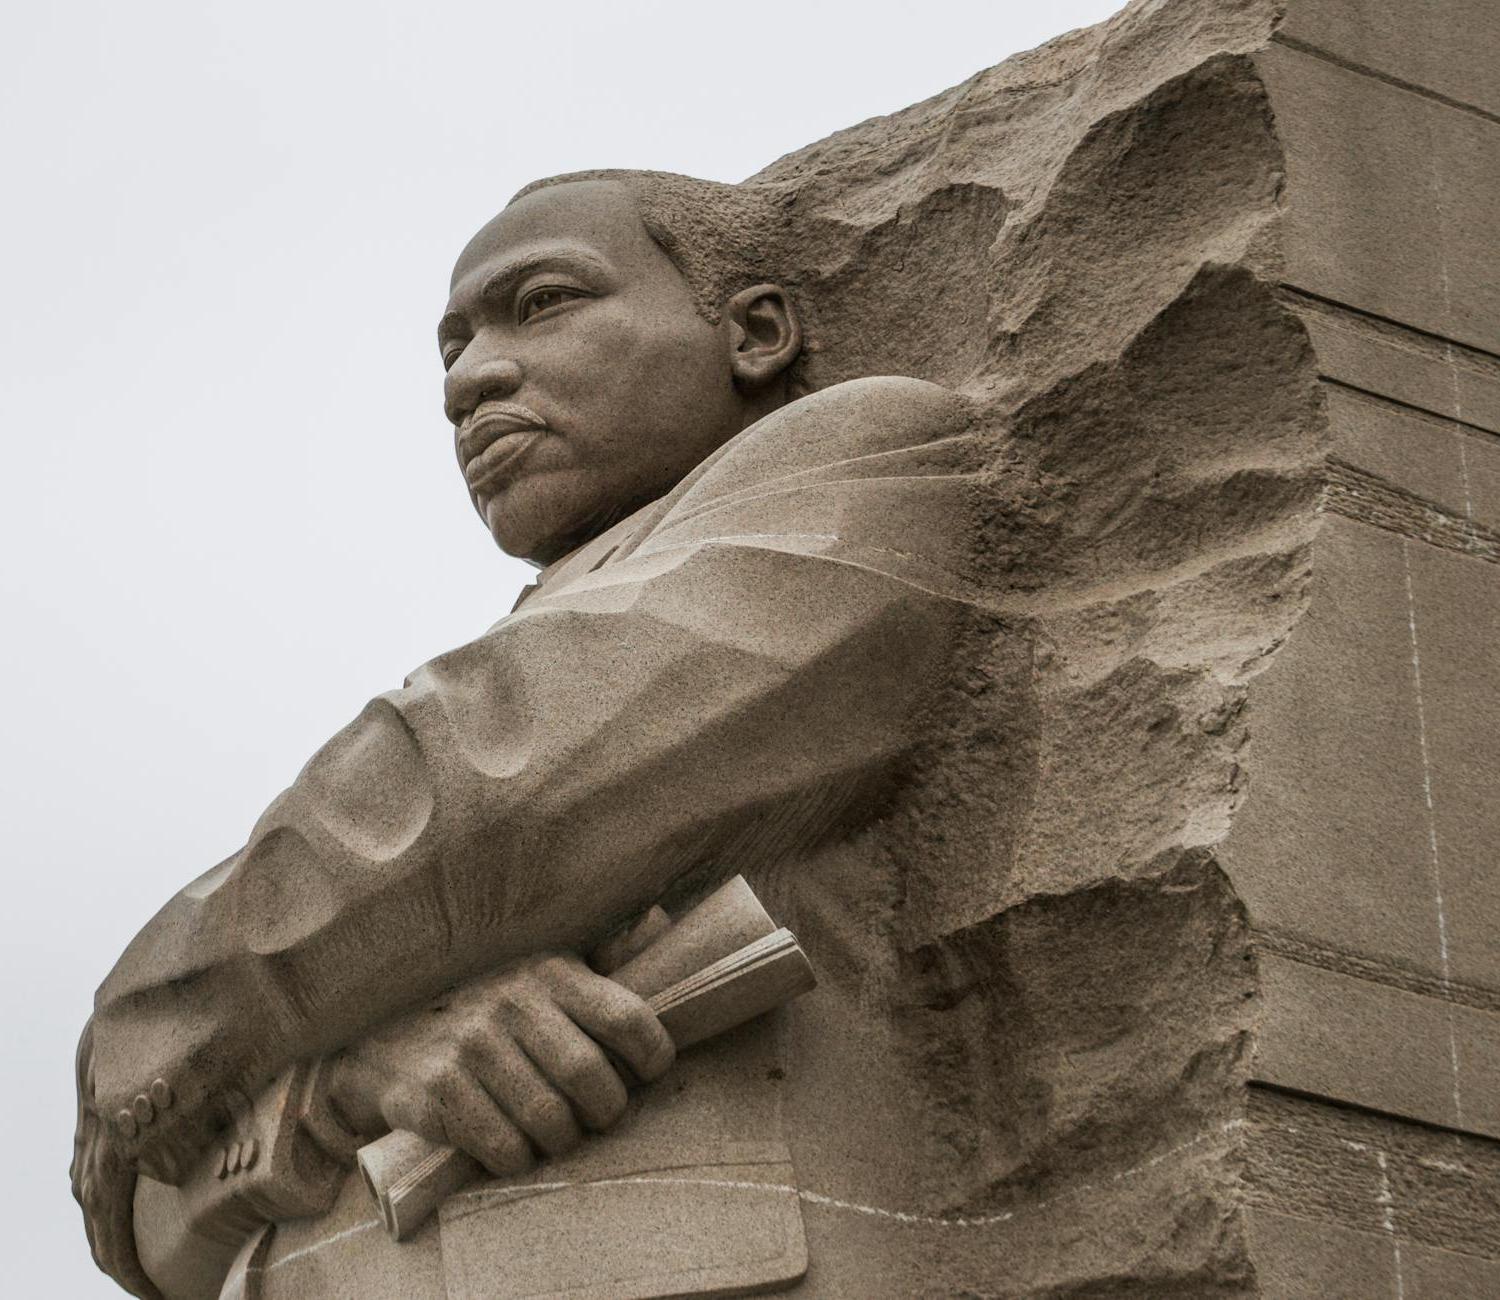 Granite statue of civil rights movement leader against overcast sky